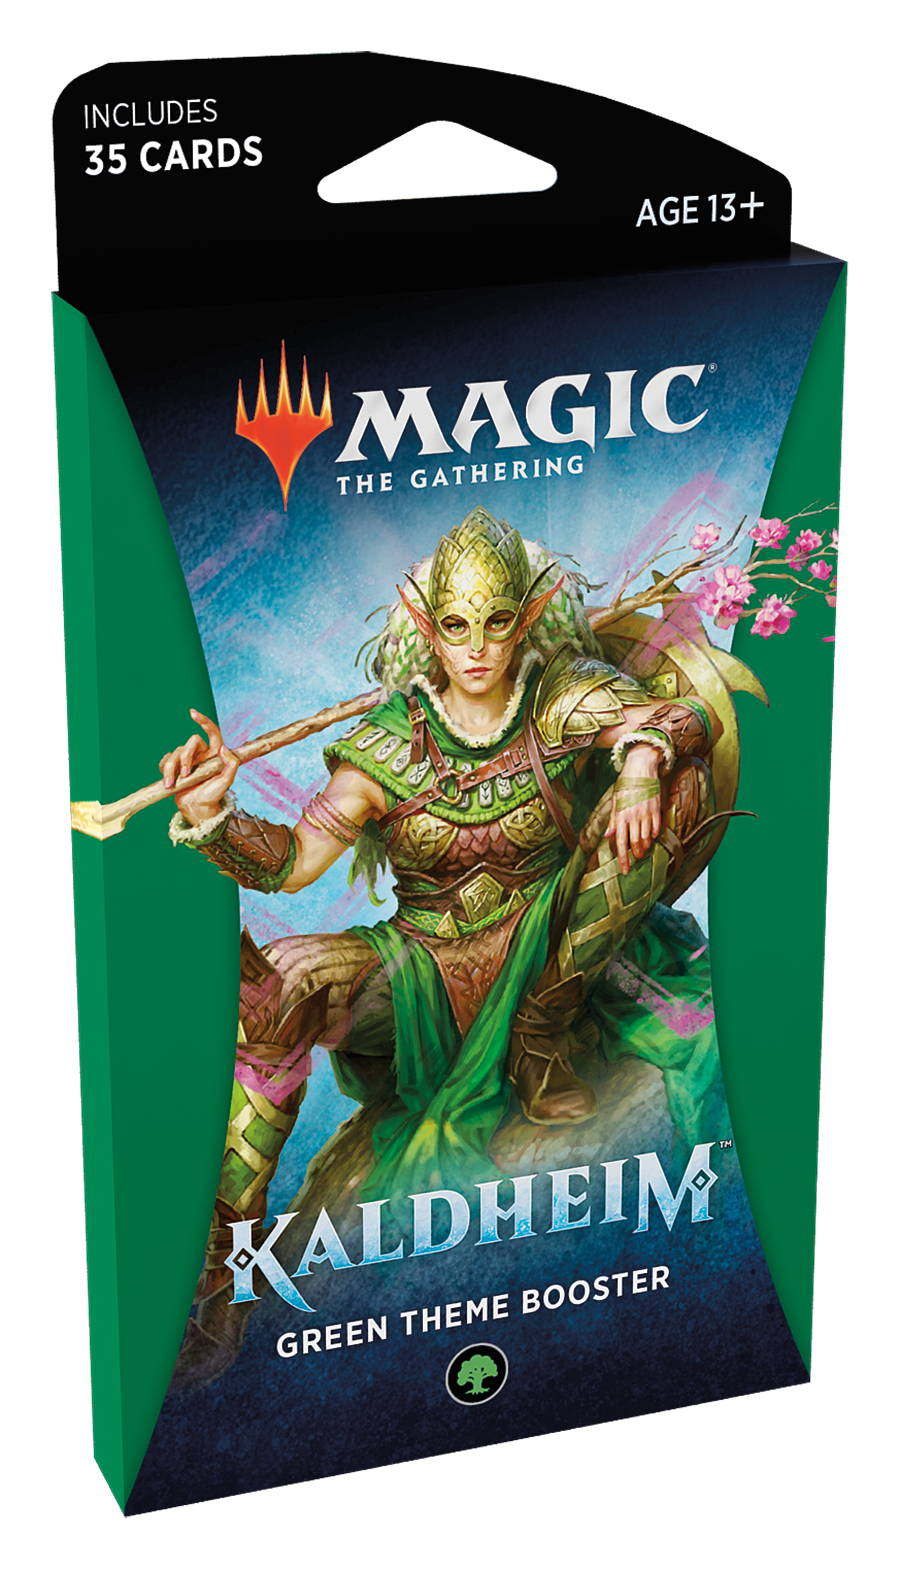 Magic the Gathering: Kaldheim Theme Booster